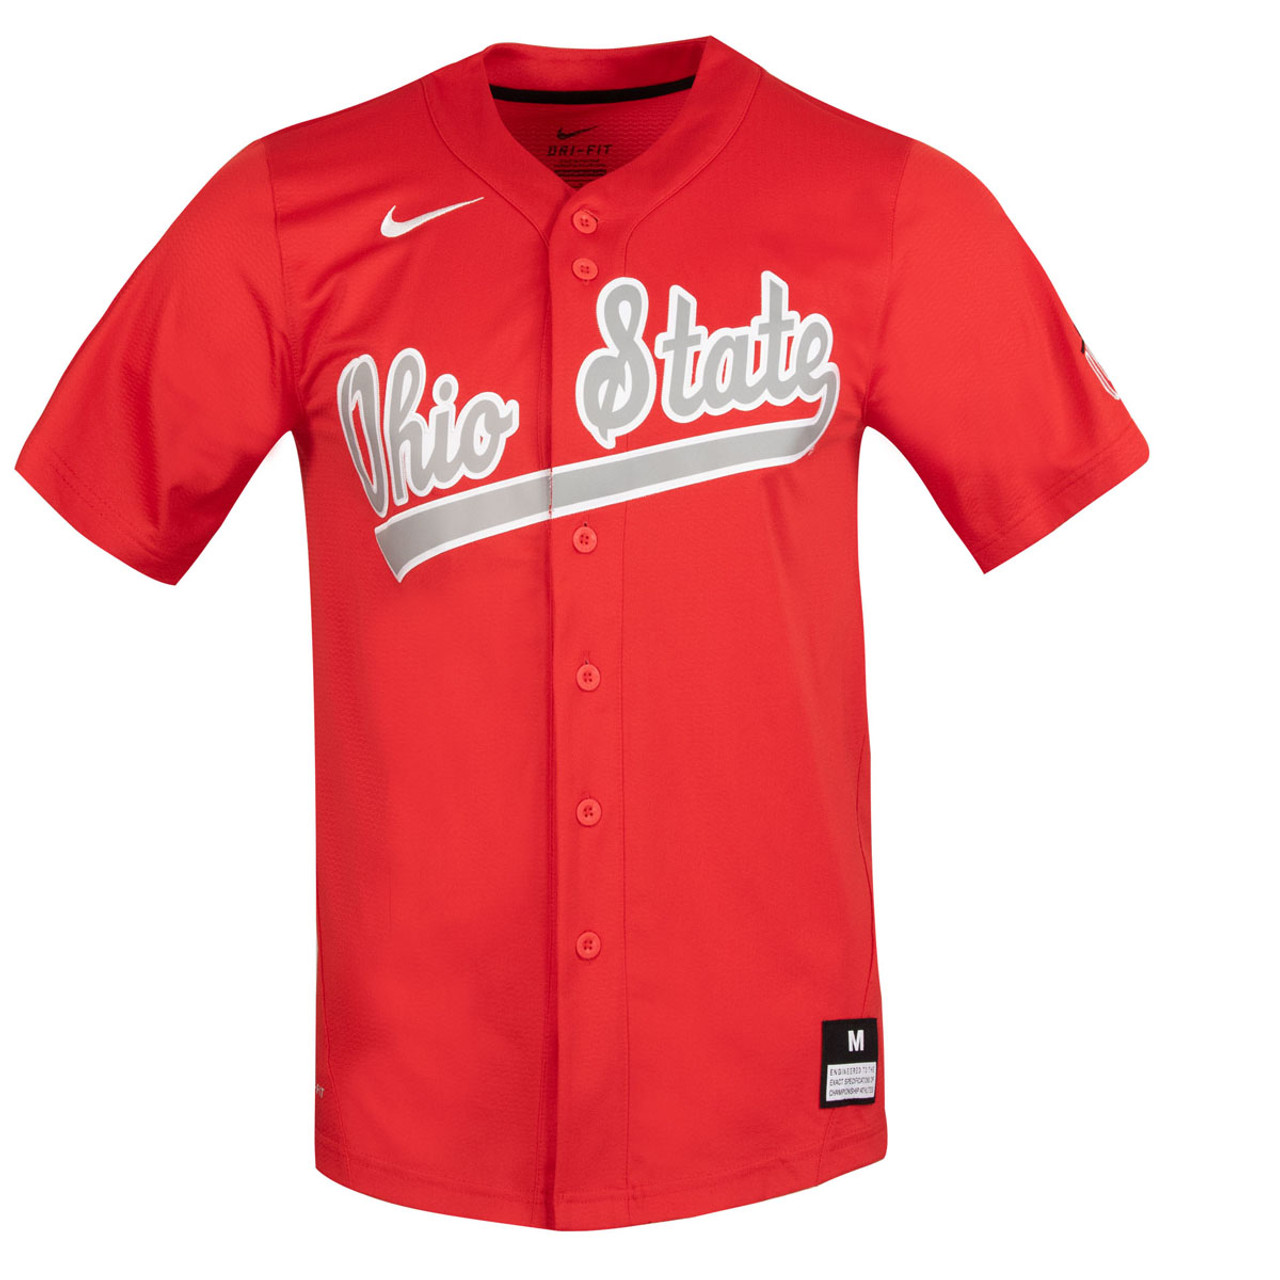 Nike Red Ohio State Baseball Jersey